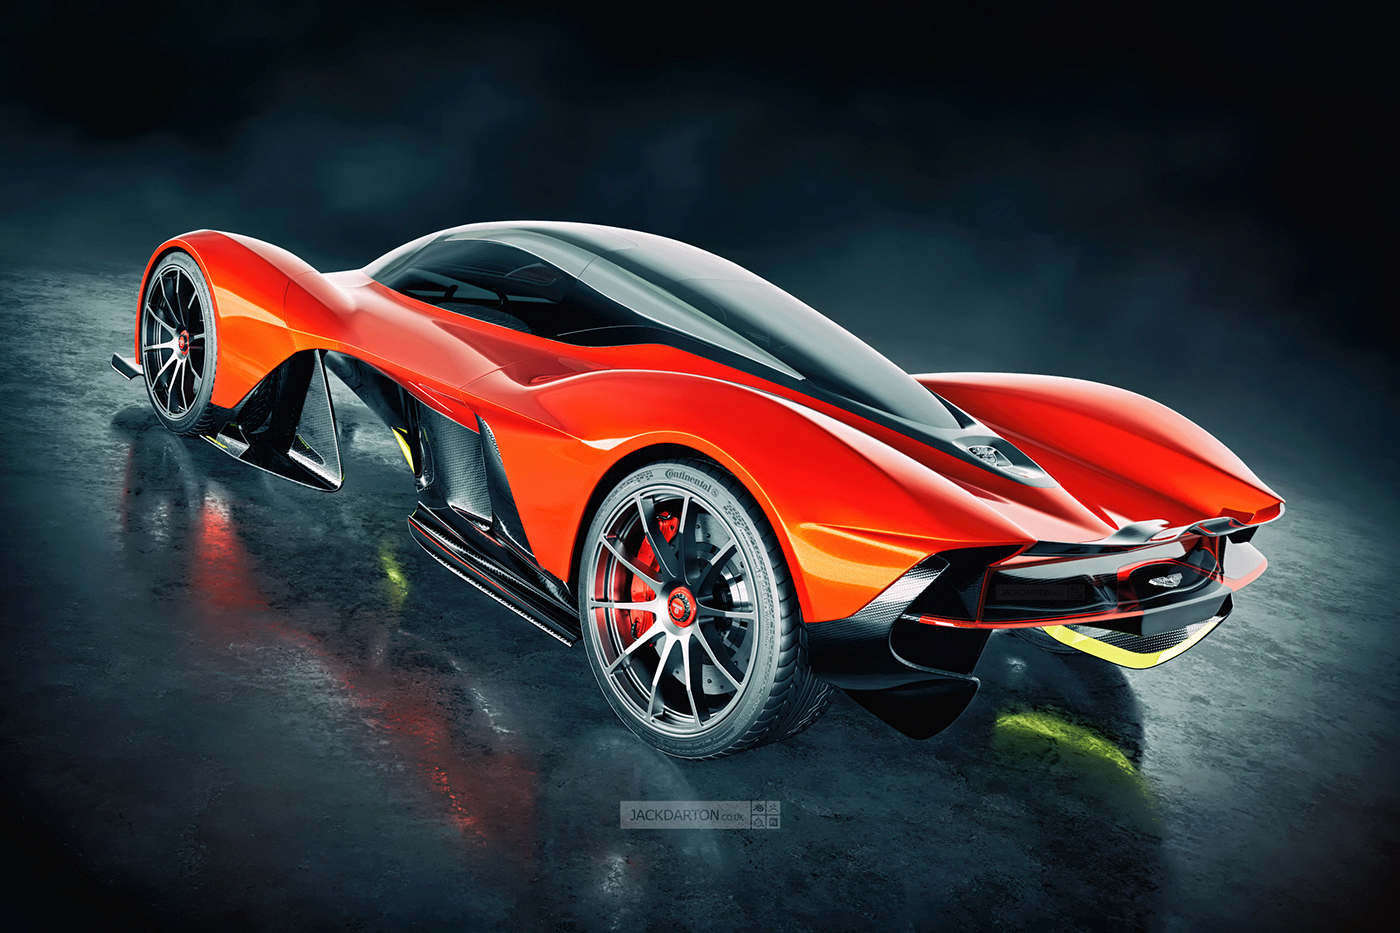 jackdarton astonmartin RedBull supercar 3D Render carbonfibre red studio